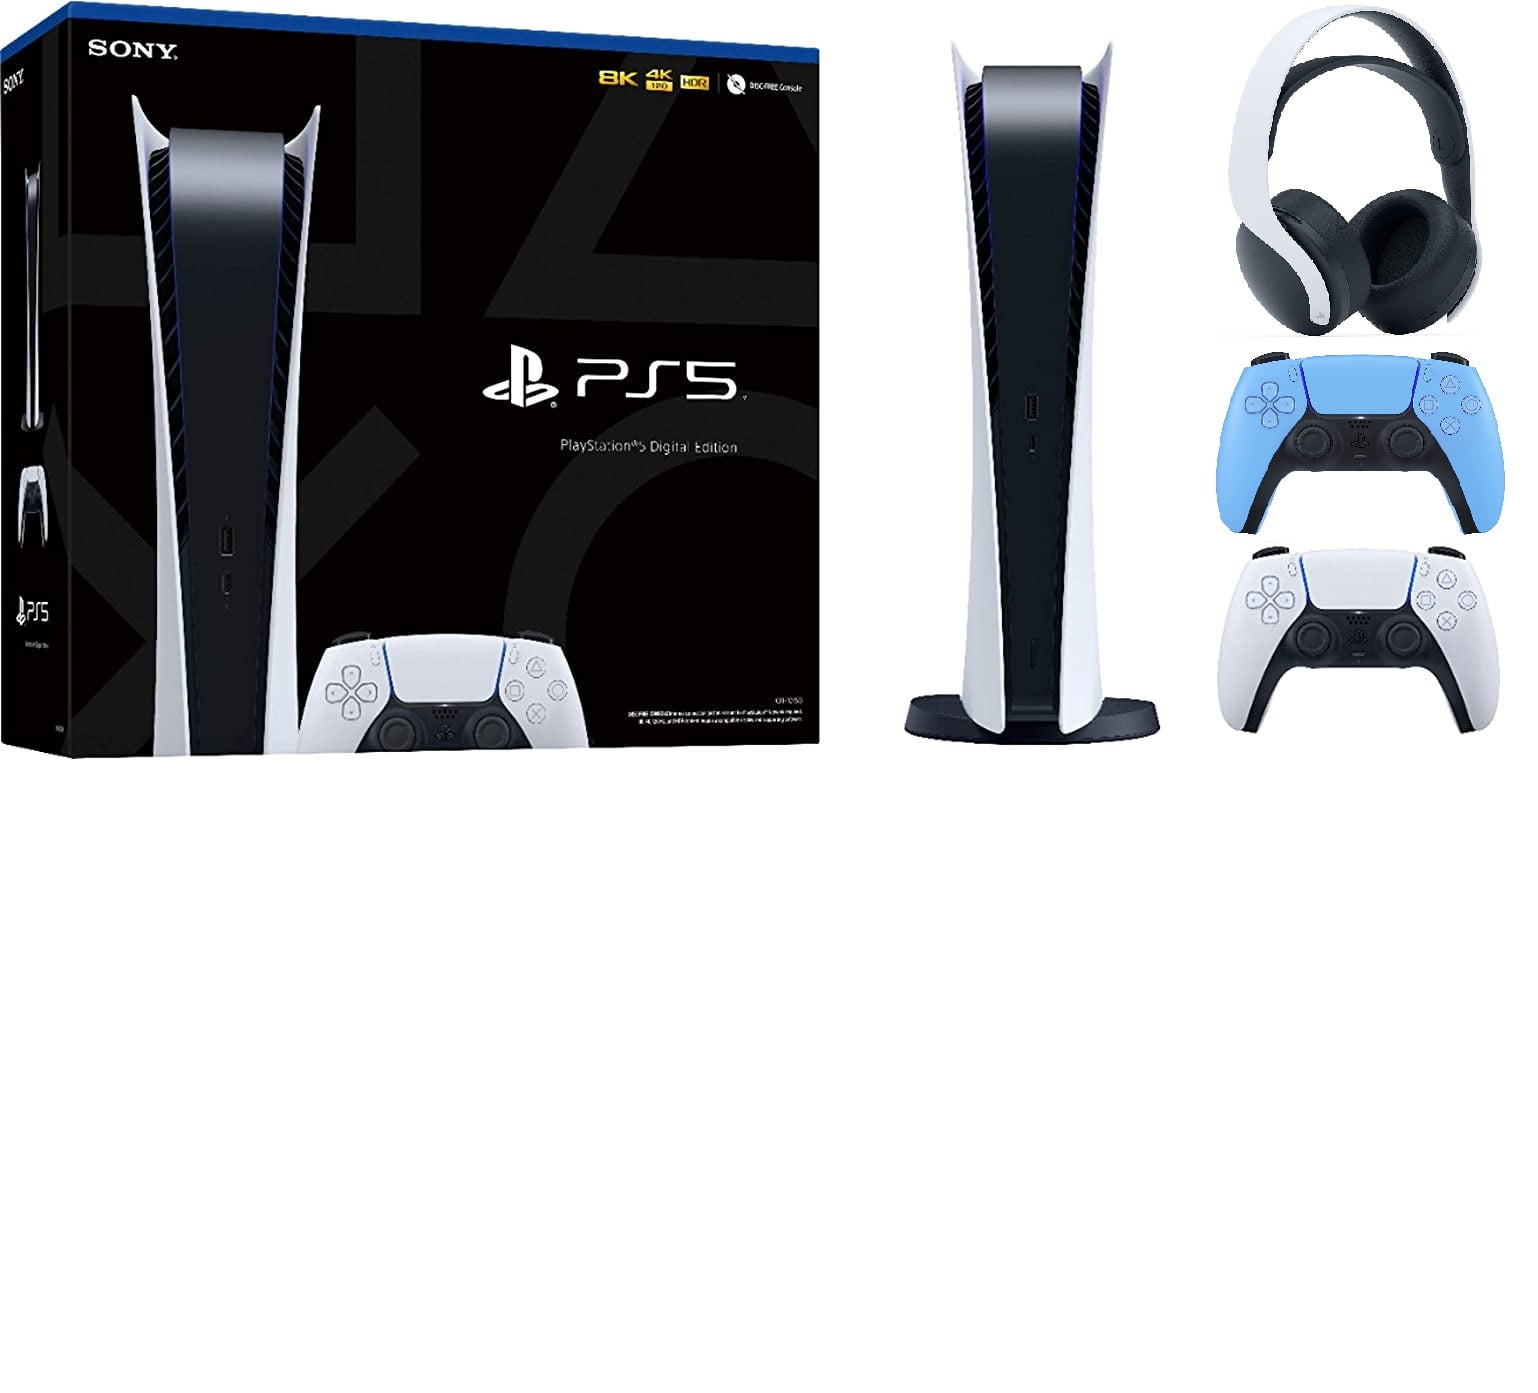 PlayStation 5 Digital Edition with PS5 Starlight Blue DualSense